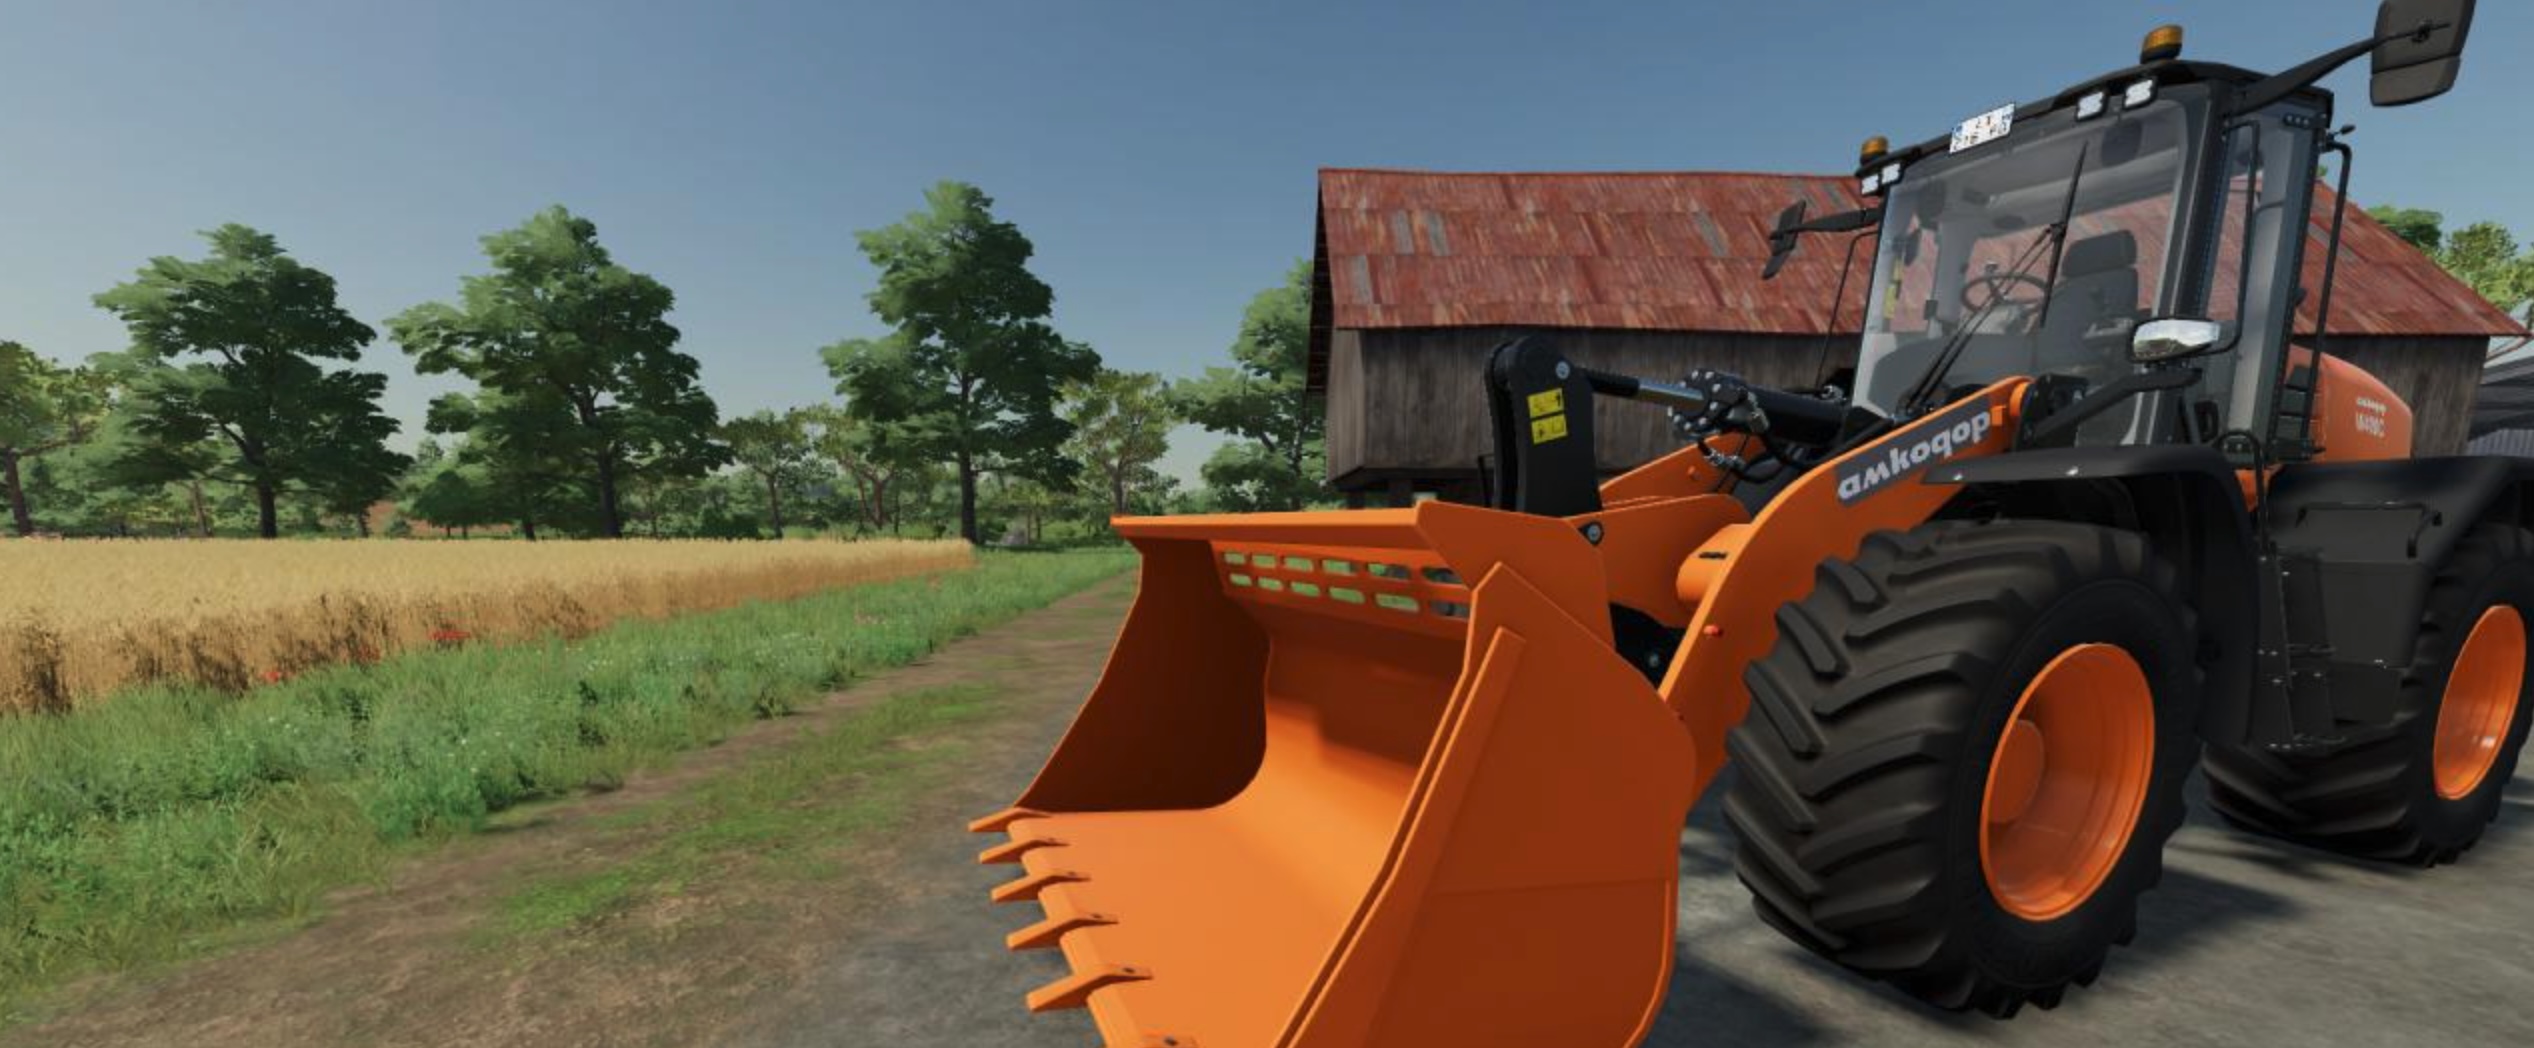 Wheel Loader Shovel V10 Fs22 Farming Simulator 22 Mod Fs22 Mod